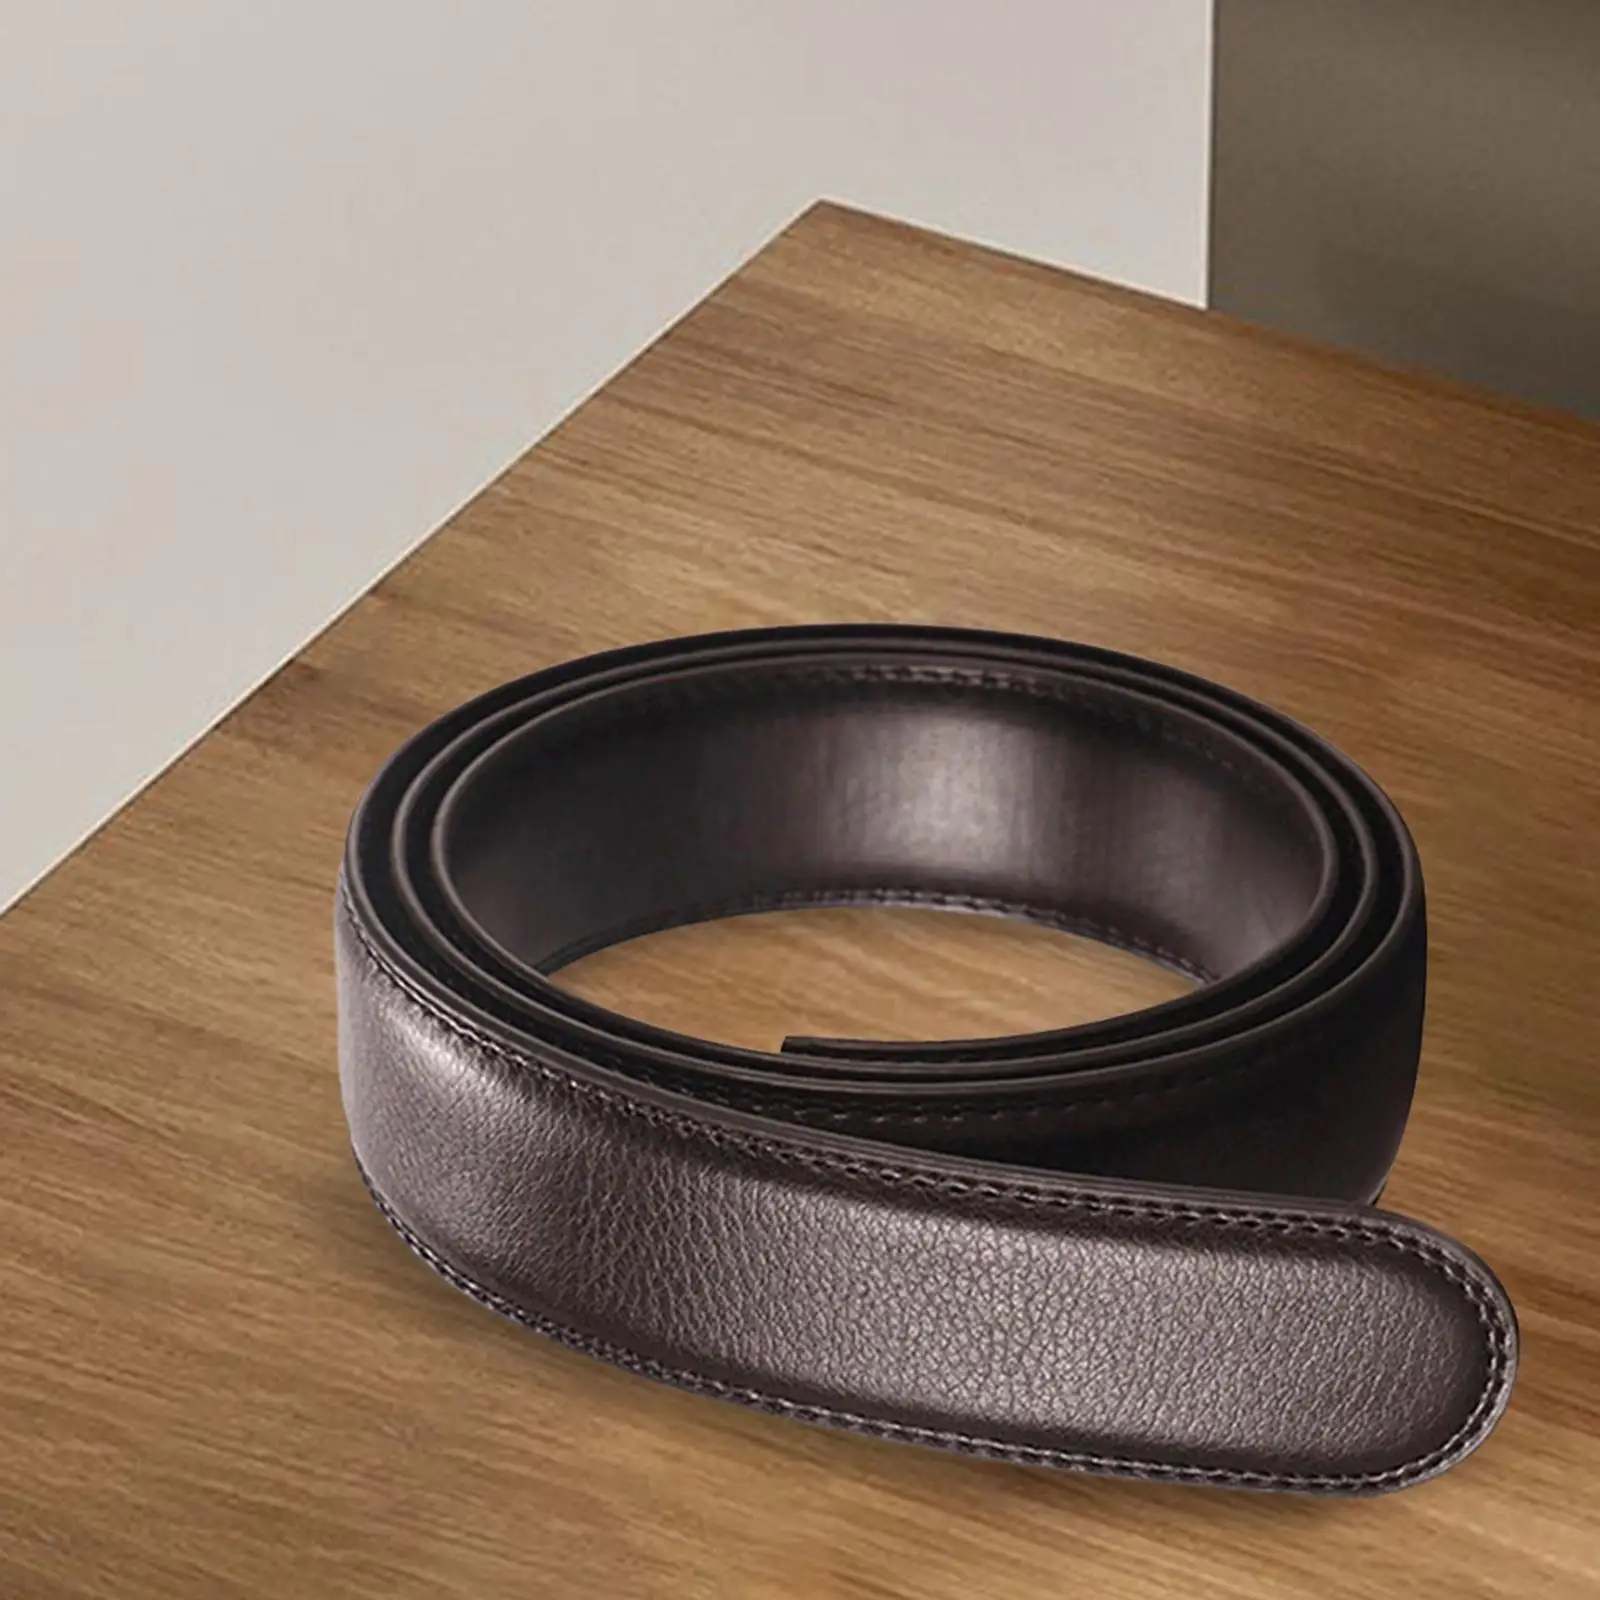 PU Leather Ratchet Belt without Buckle Automatic Belt Lightweight Fashion Waist